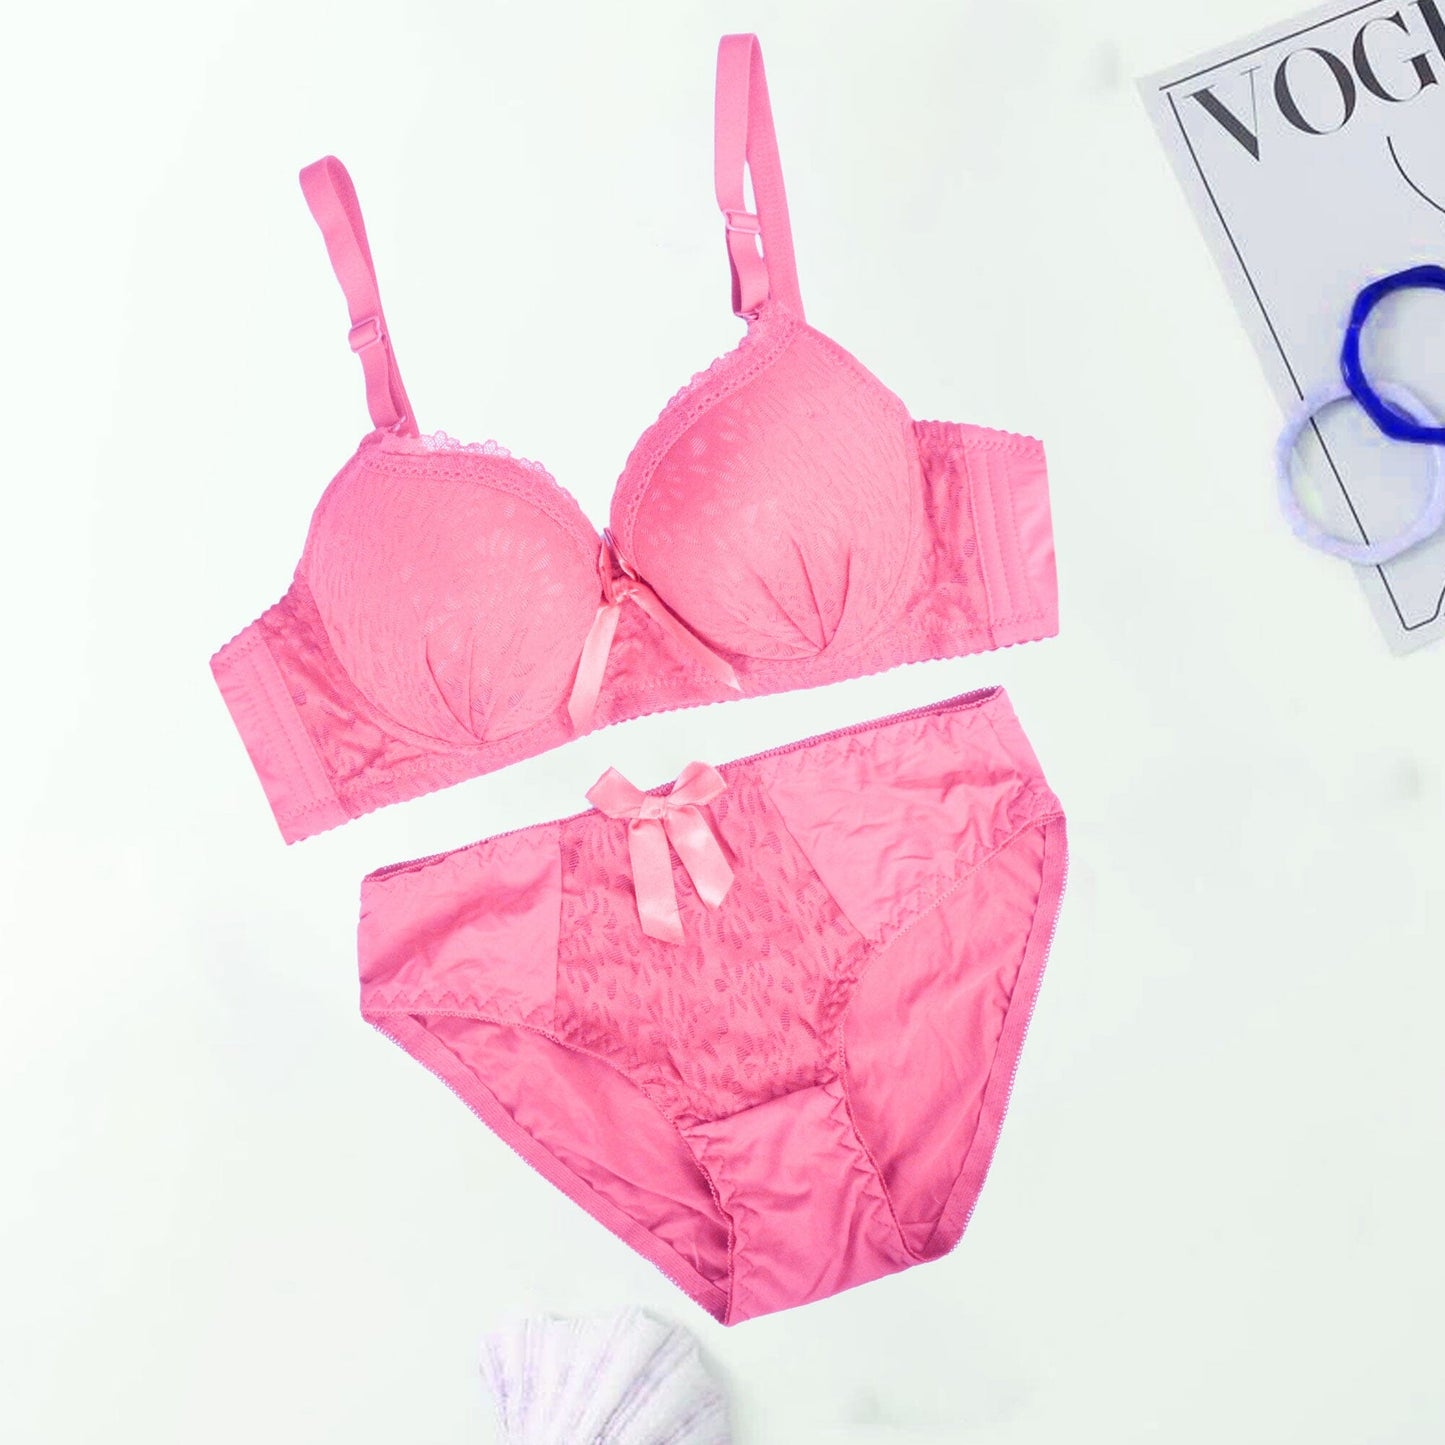 Xuex Women's Wired Design Padded Bra & Pantie Set Women's Lingerie RAM Pink 32 